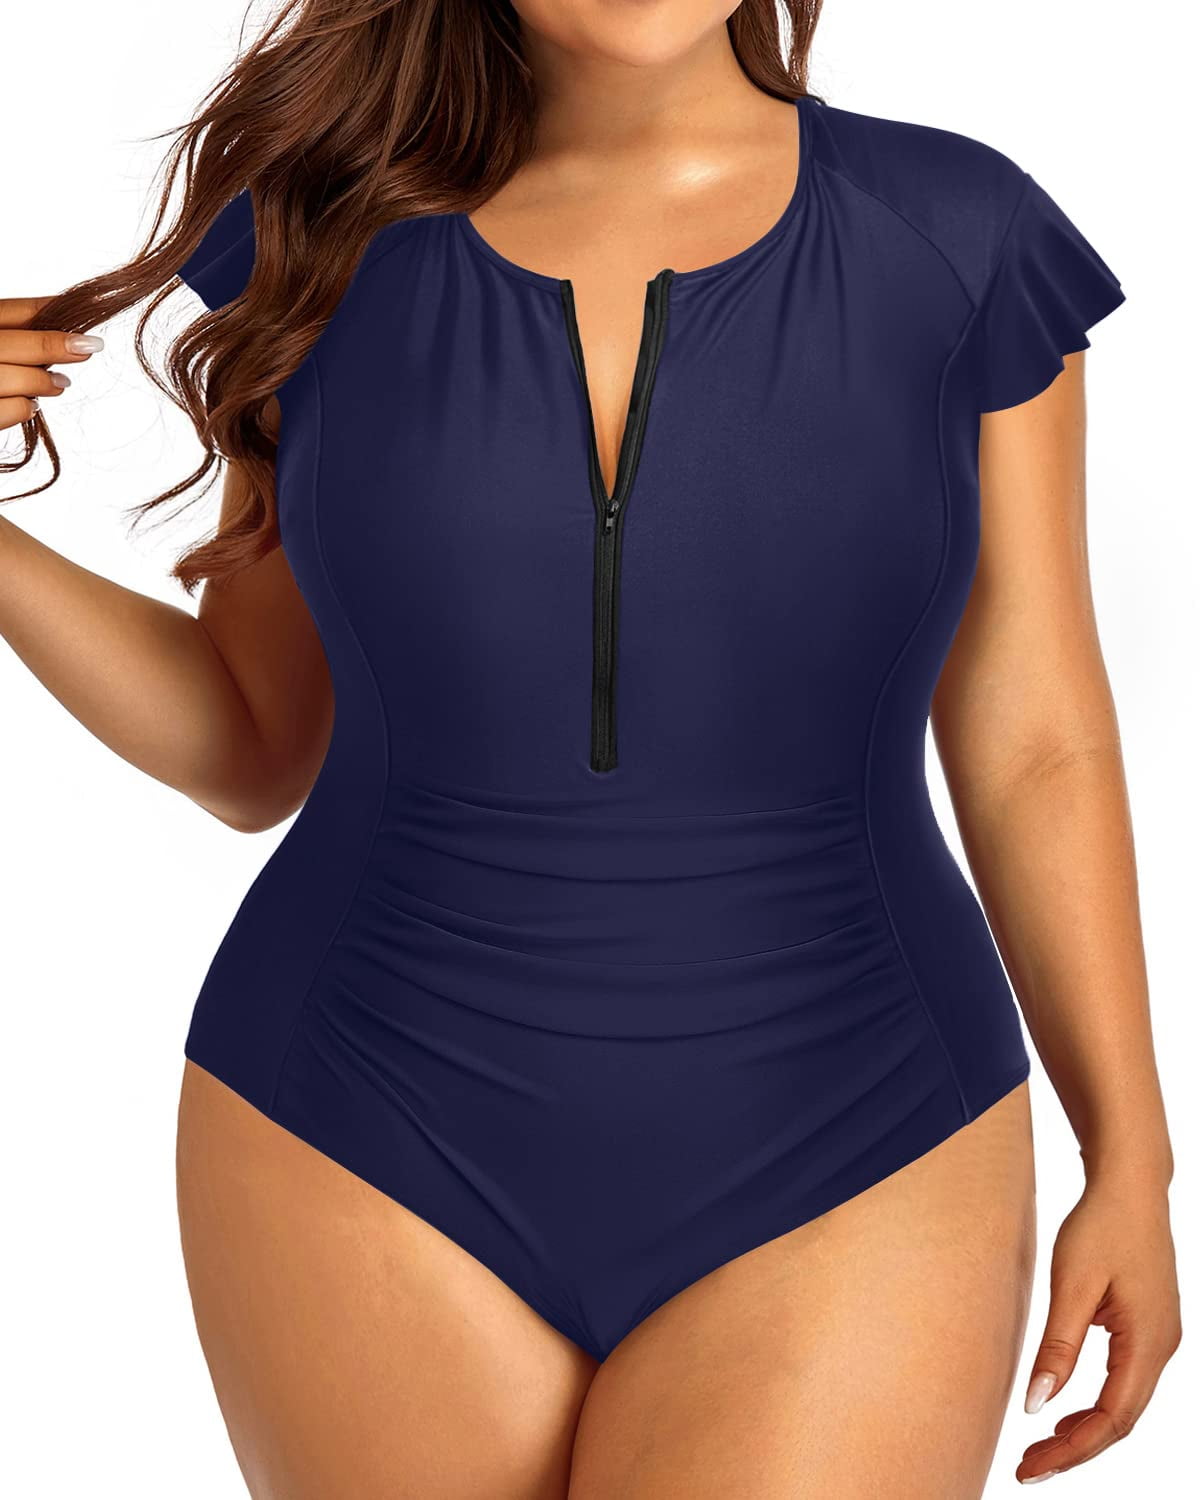  Holipick Black Two Piece Tankini Swimsuits for Women